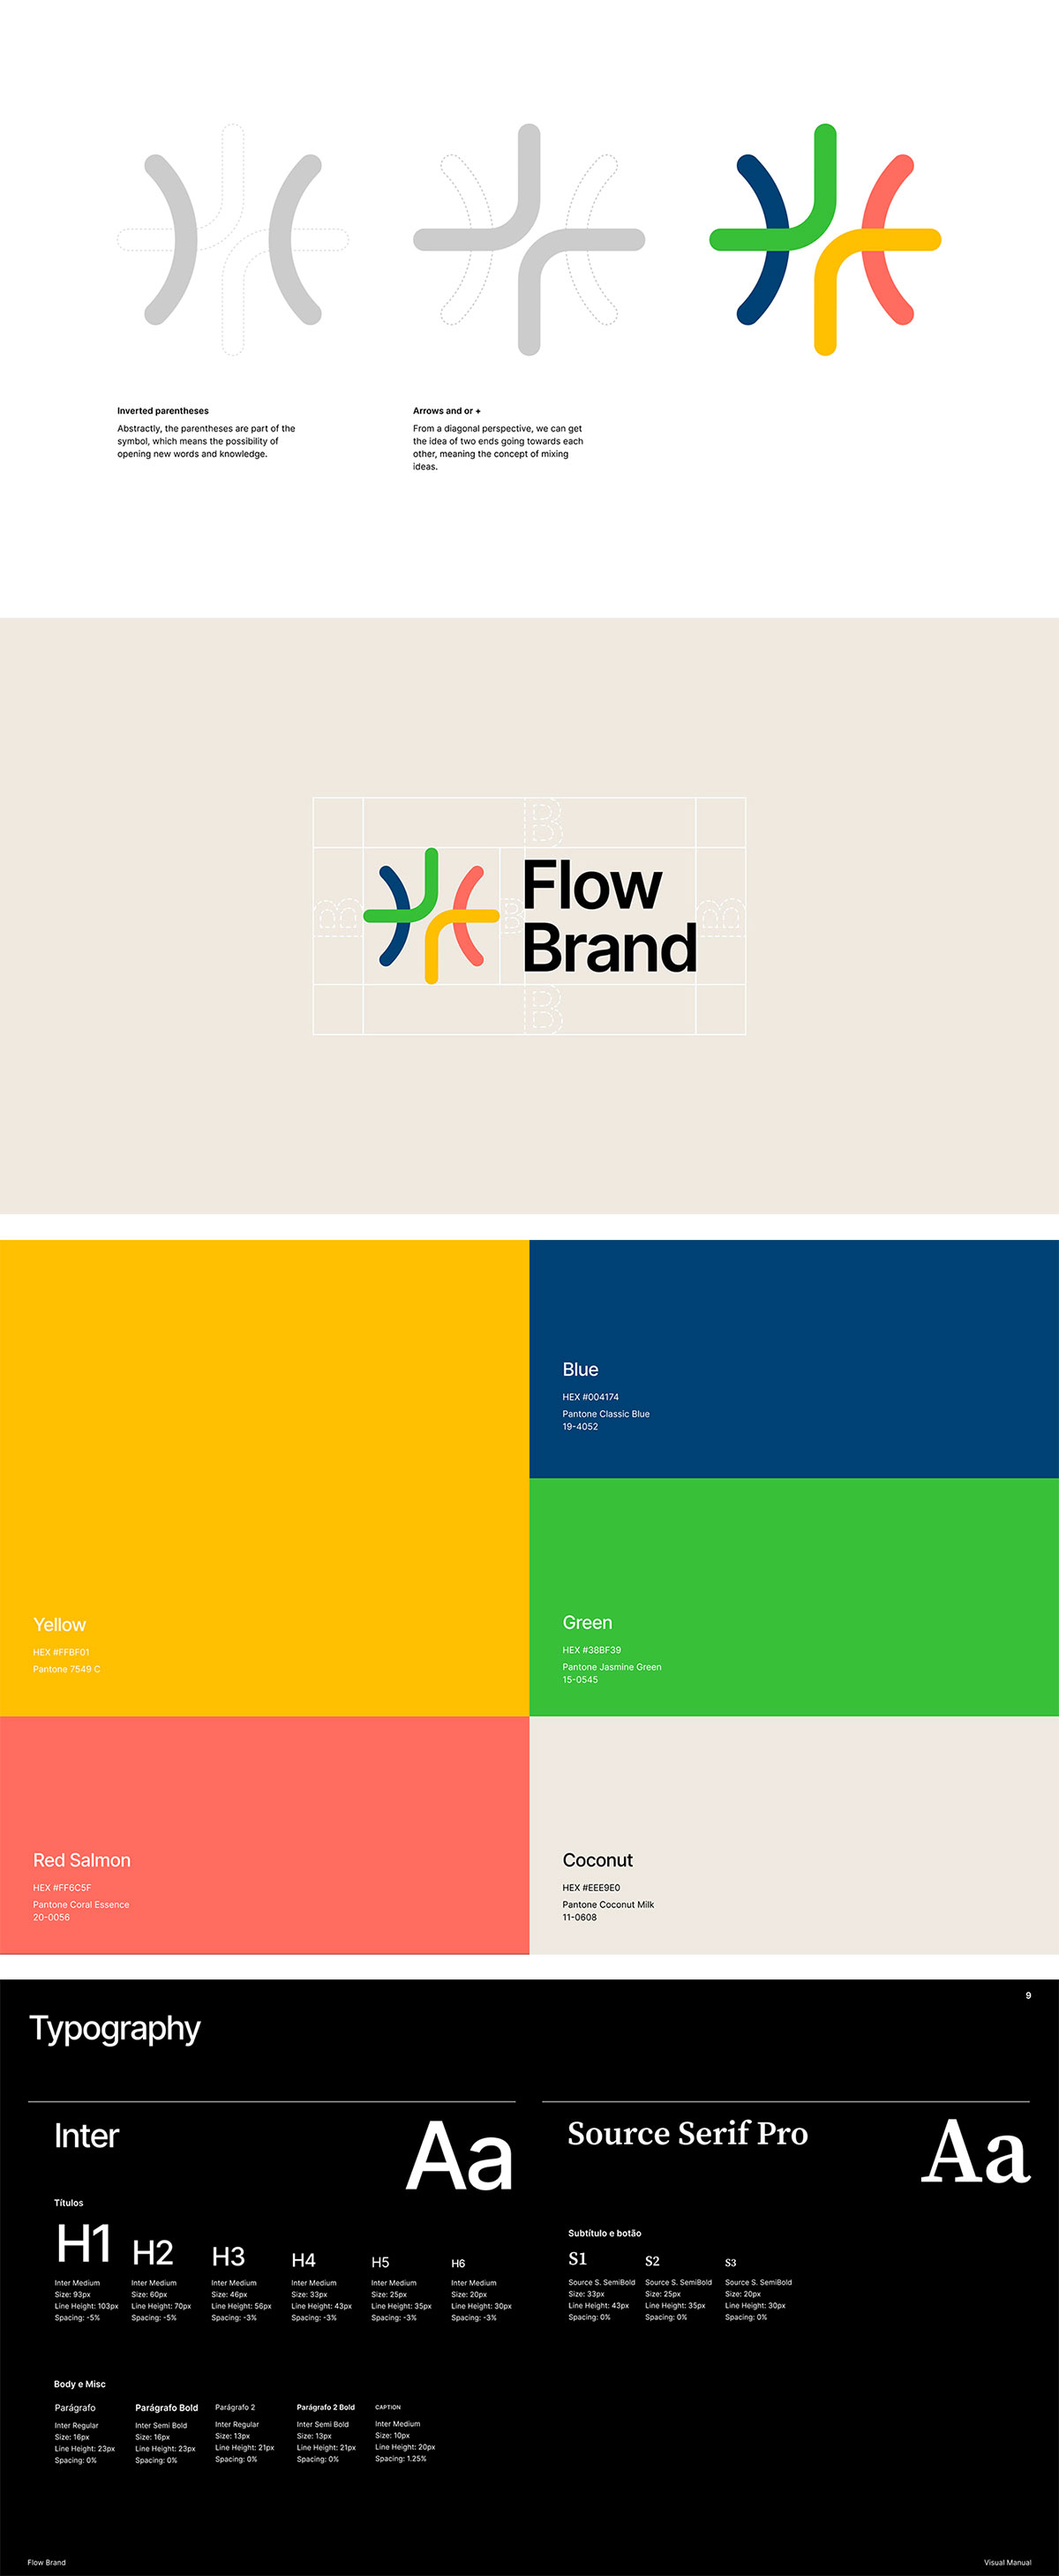 Flow brand